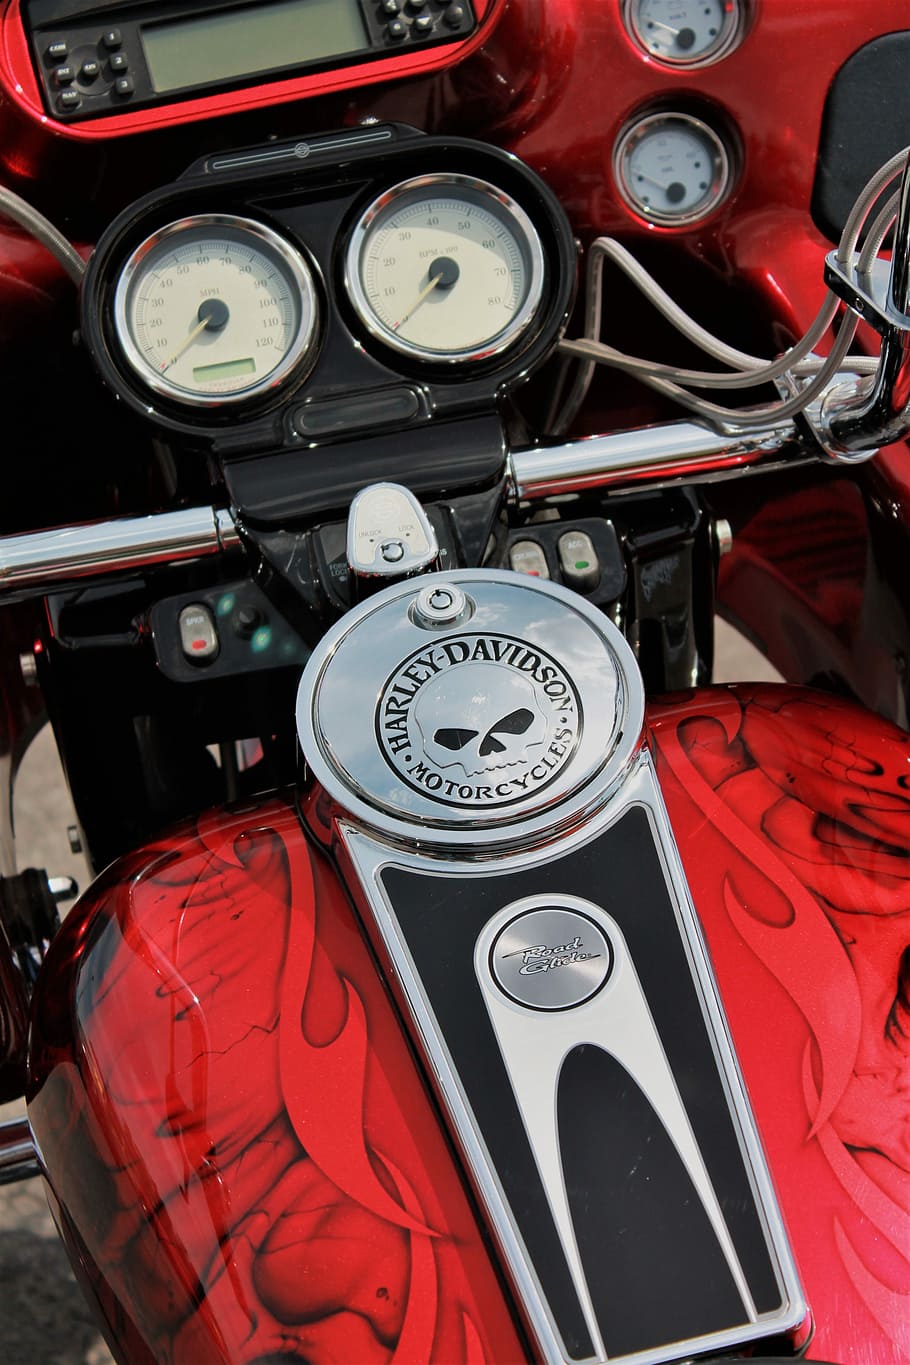 Hd Wallpaper Harley Davidson Motorcycle Red Motorcycle Skull Emblem Bike Wallpaper Flare